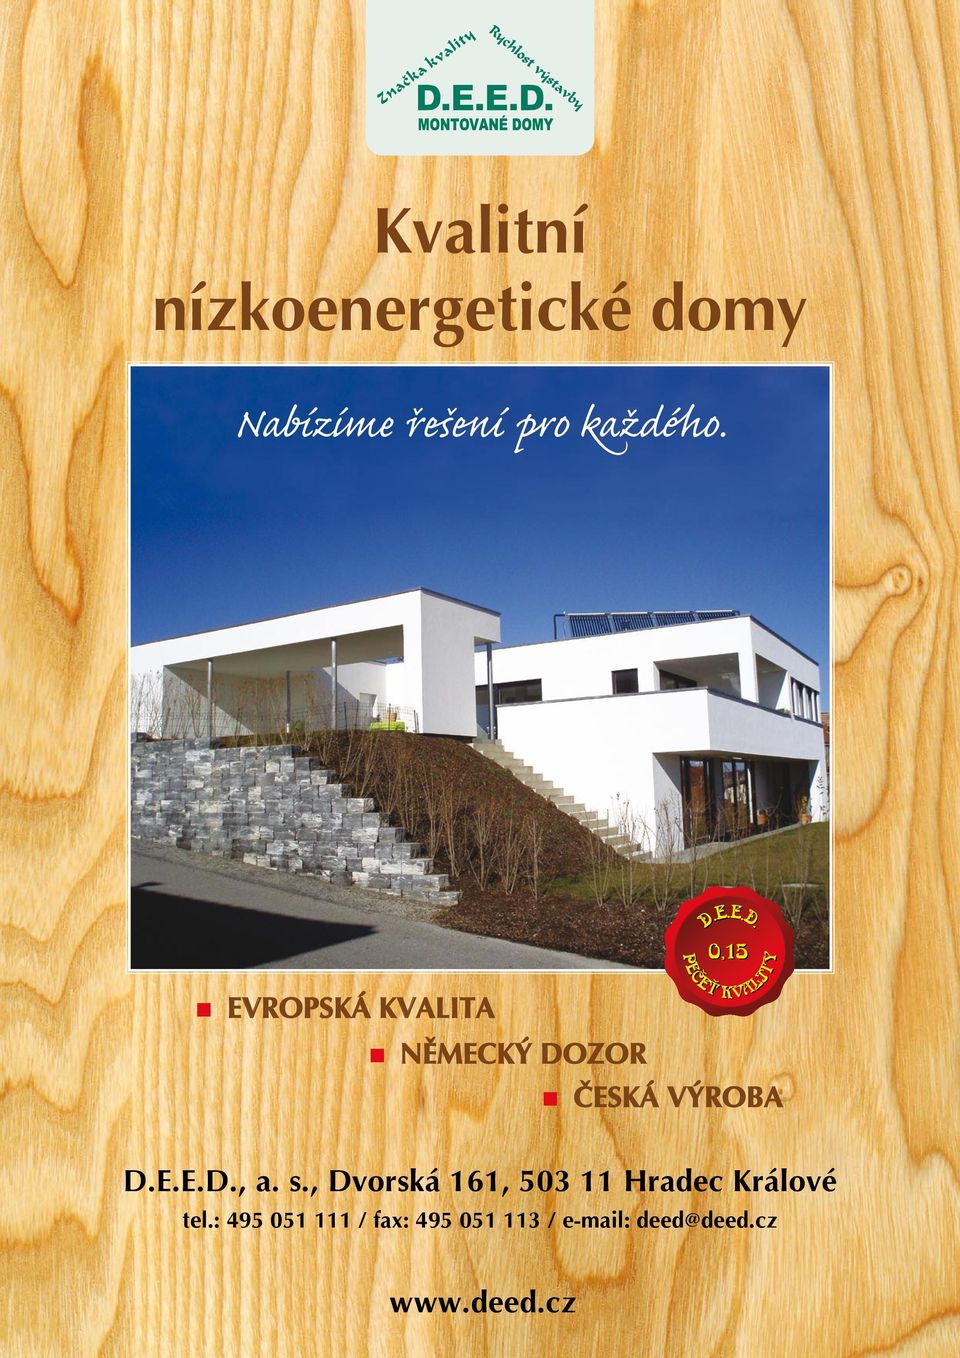 s., Dvorská 161, 503 11 Hradec Králové tel.